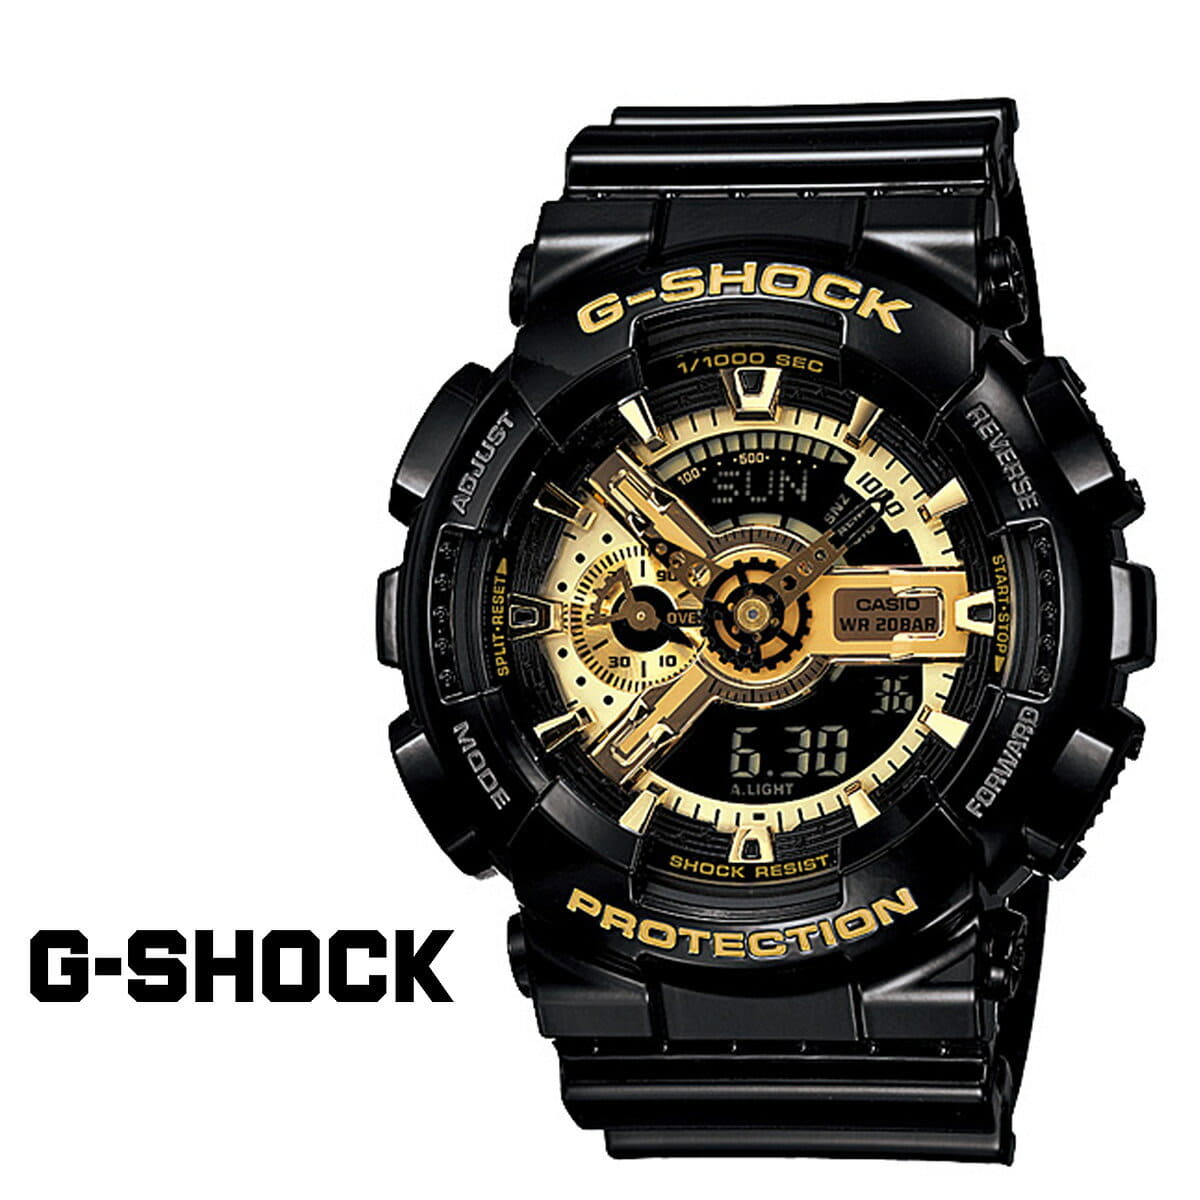 New]CASIO G-SHOCK Casio watch GA-110GB-1AJF BLACK GOLD SERIES G 